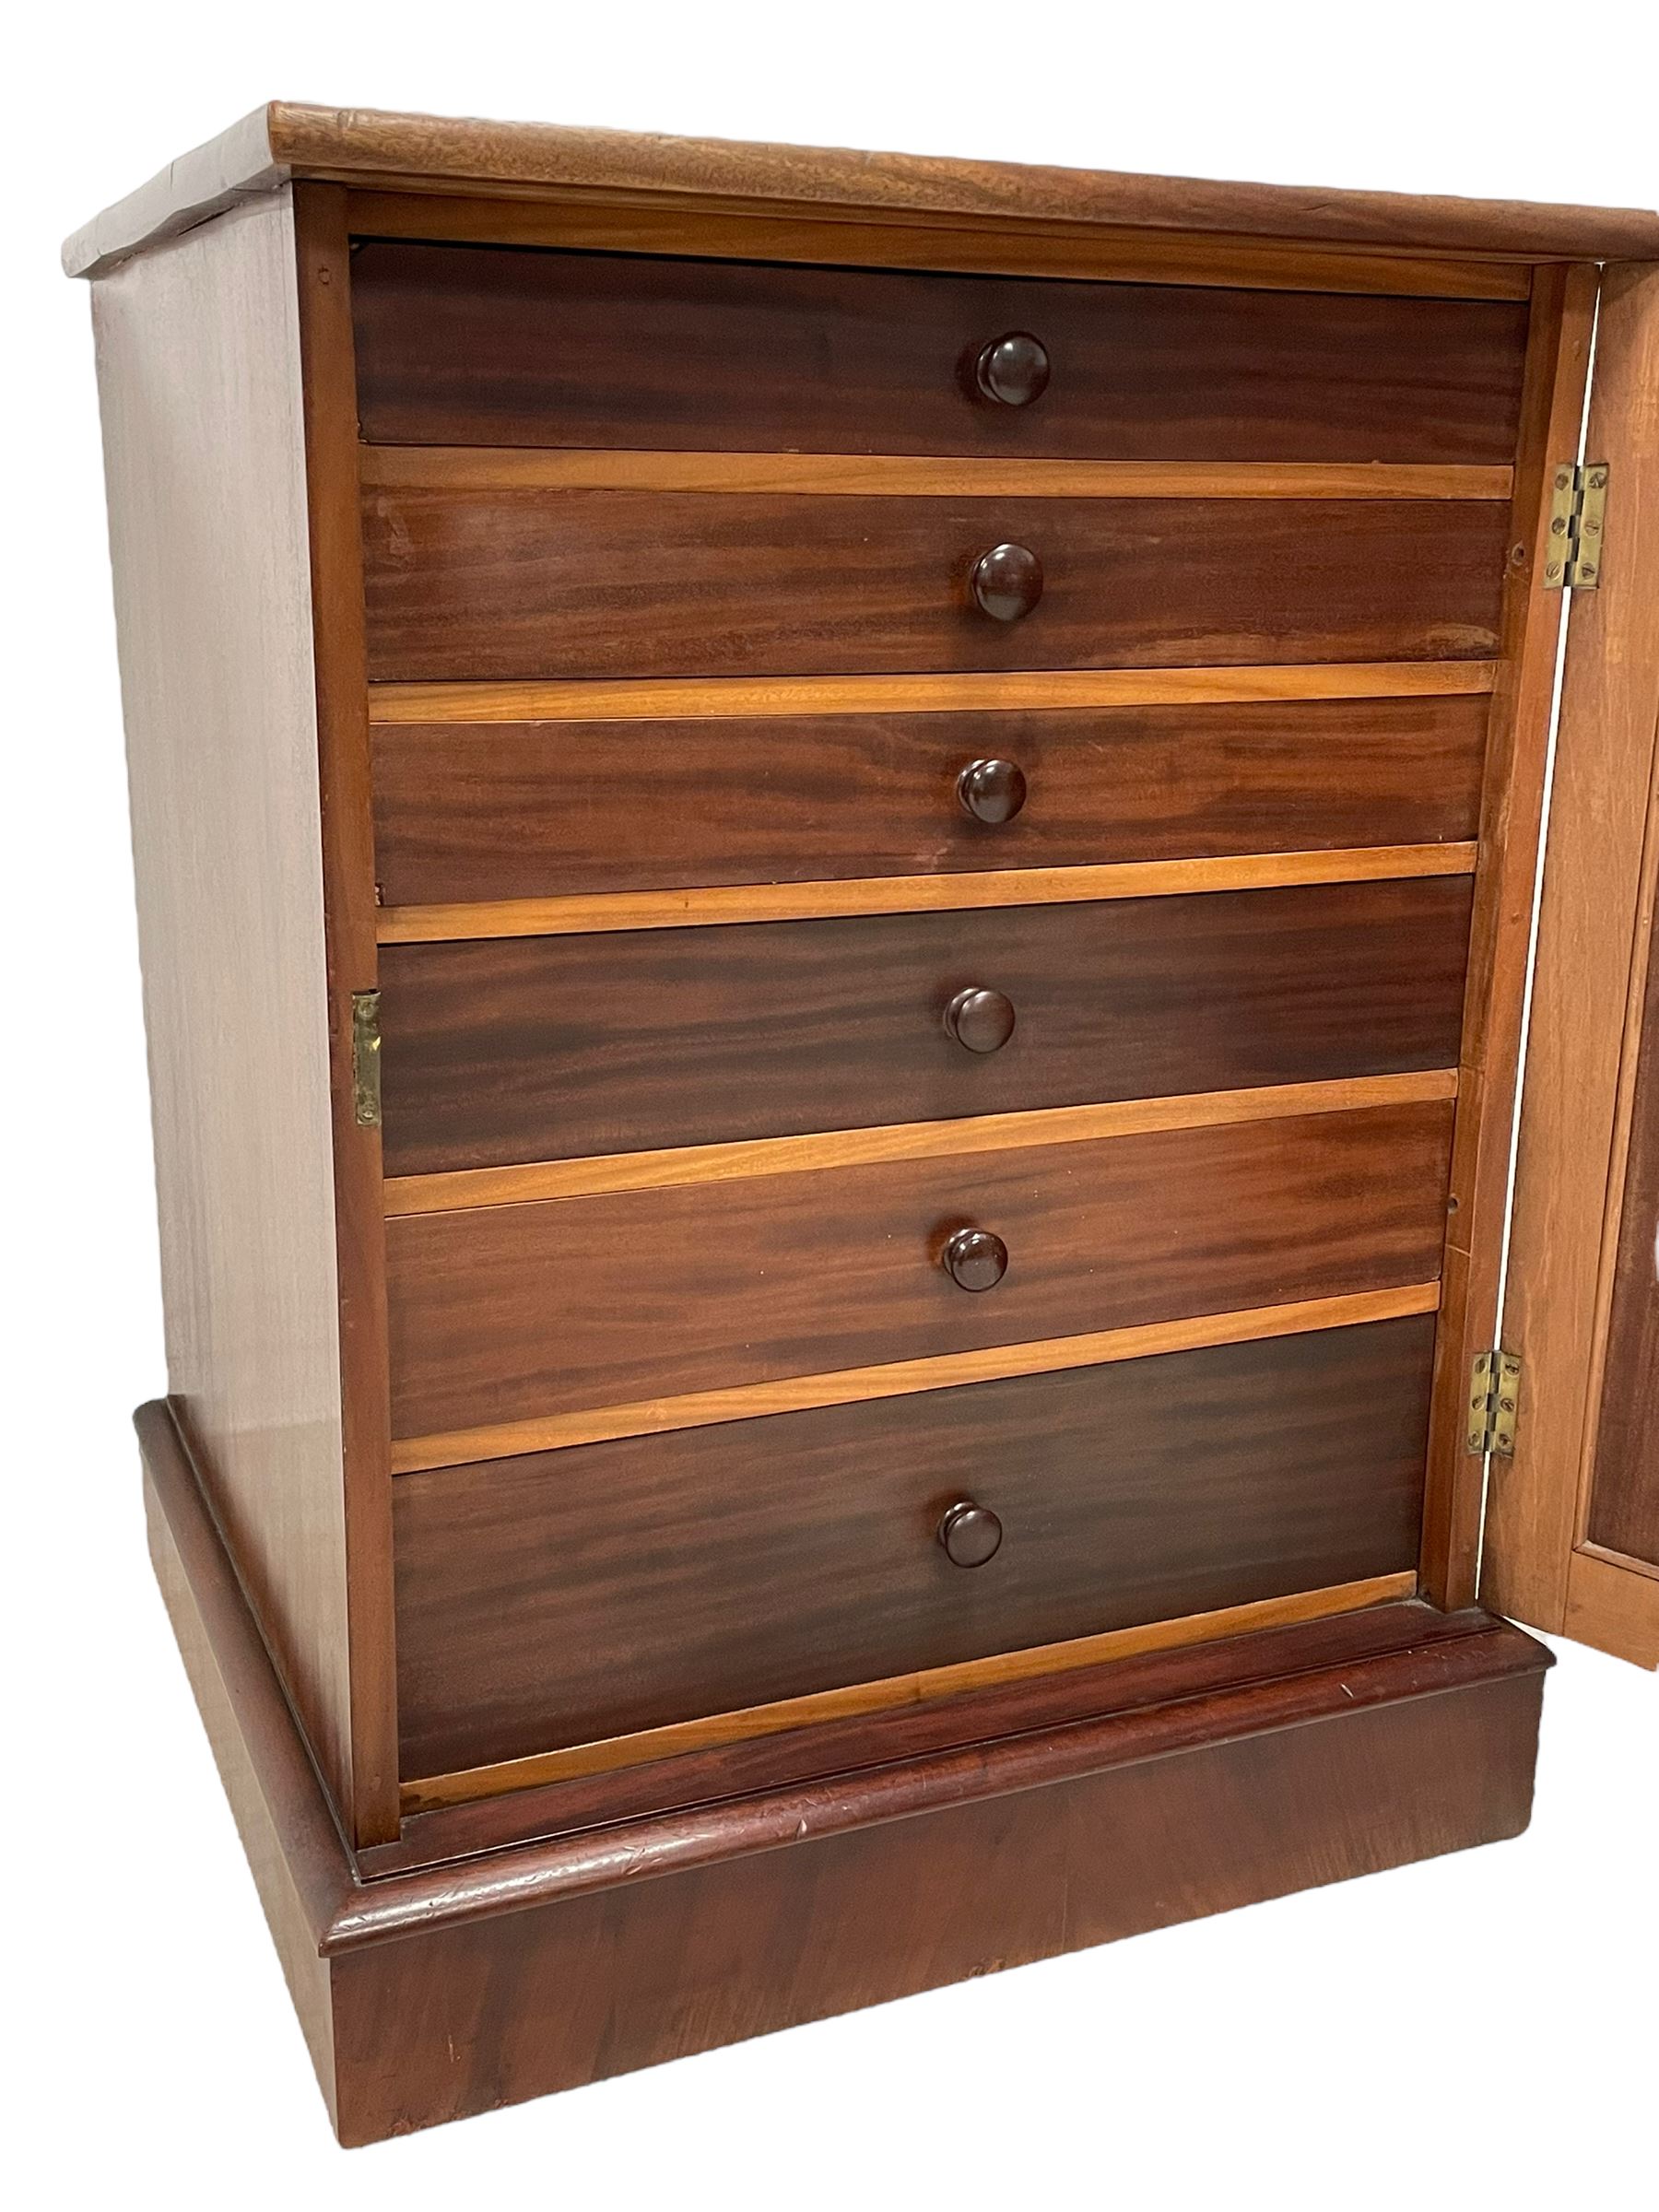 20th century mahogany pedestal collectors filing cabinet - Image 4 of 5